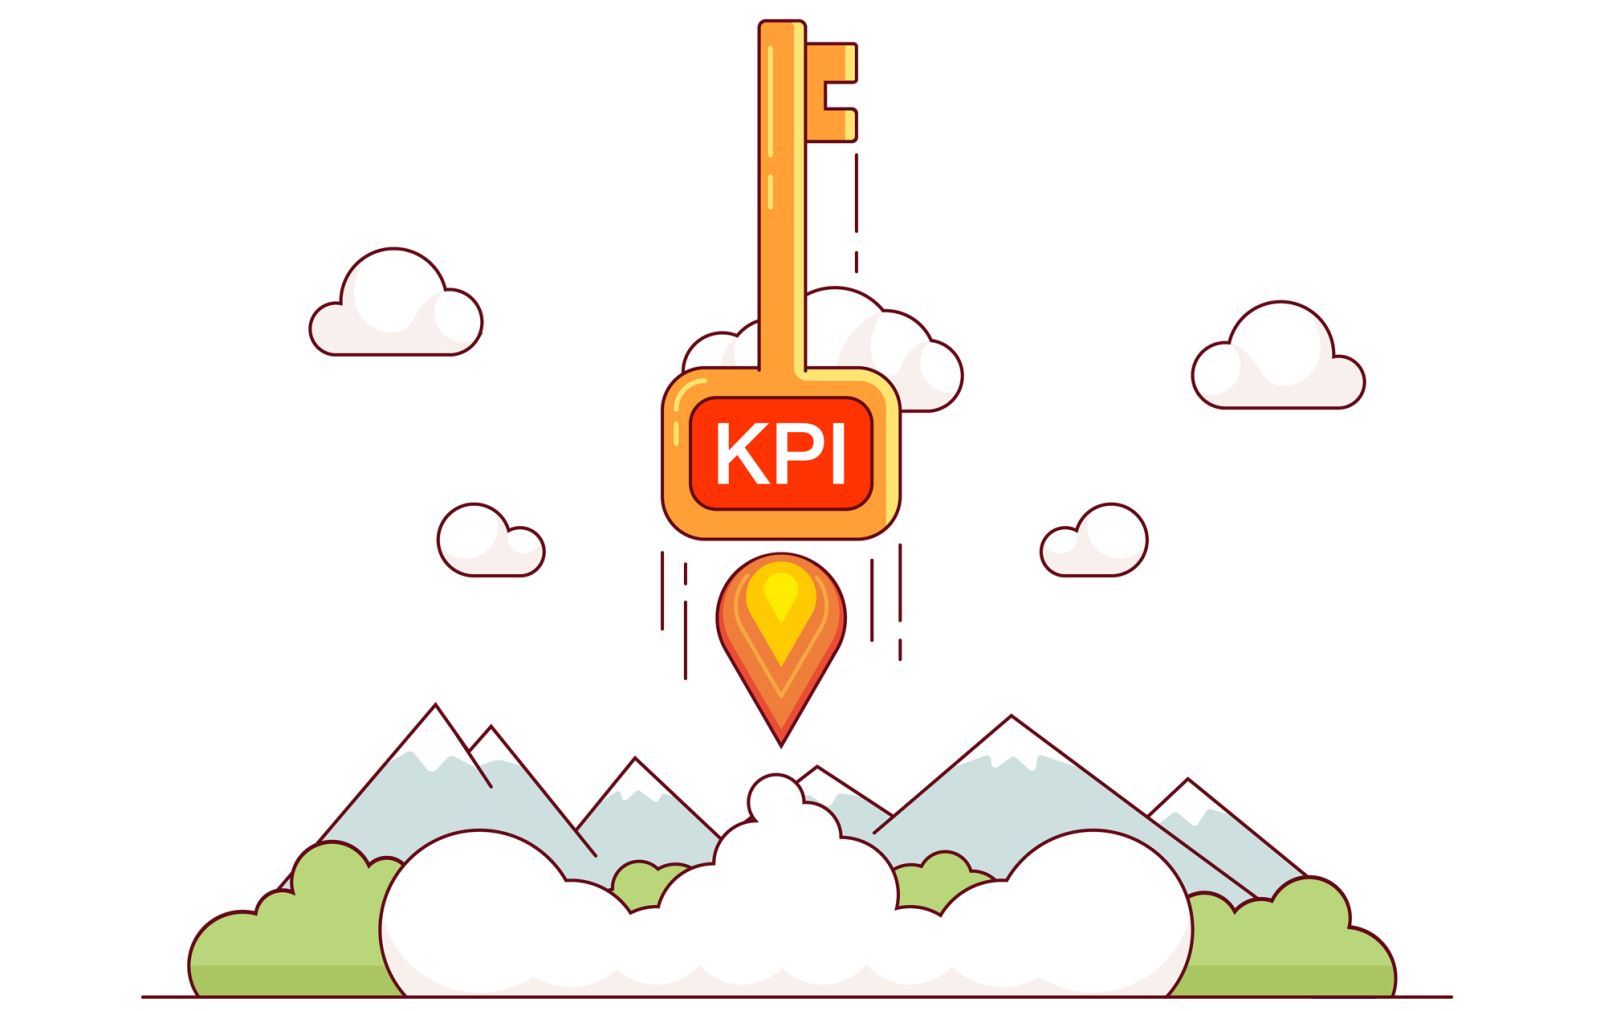 triển khai KPI hiệu quả